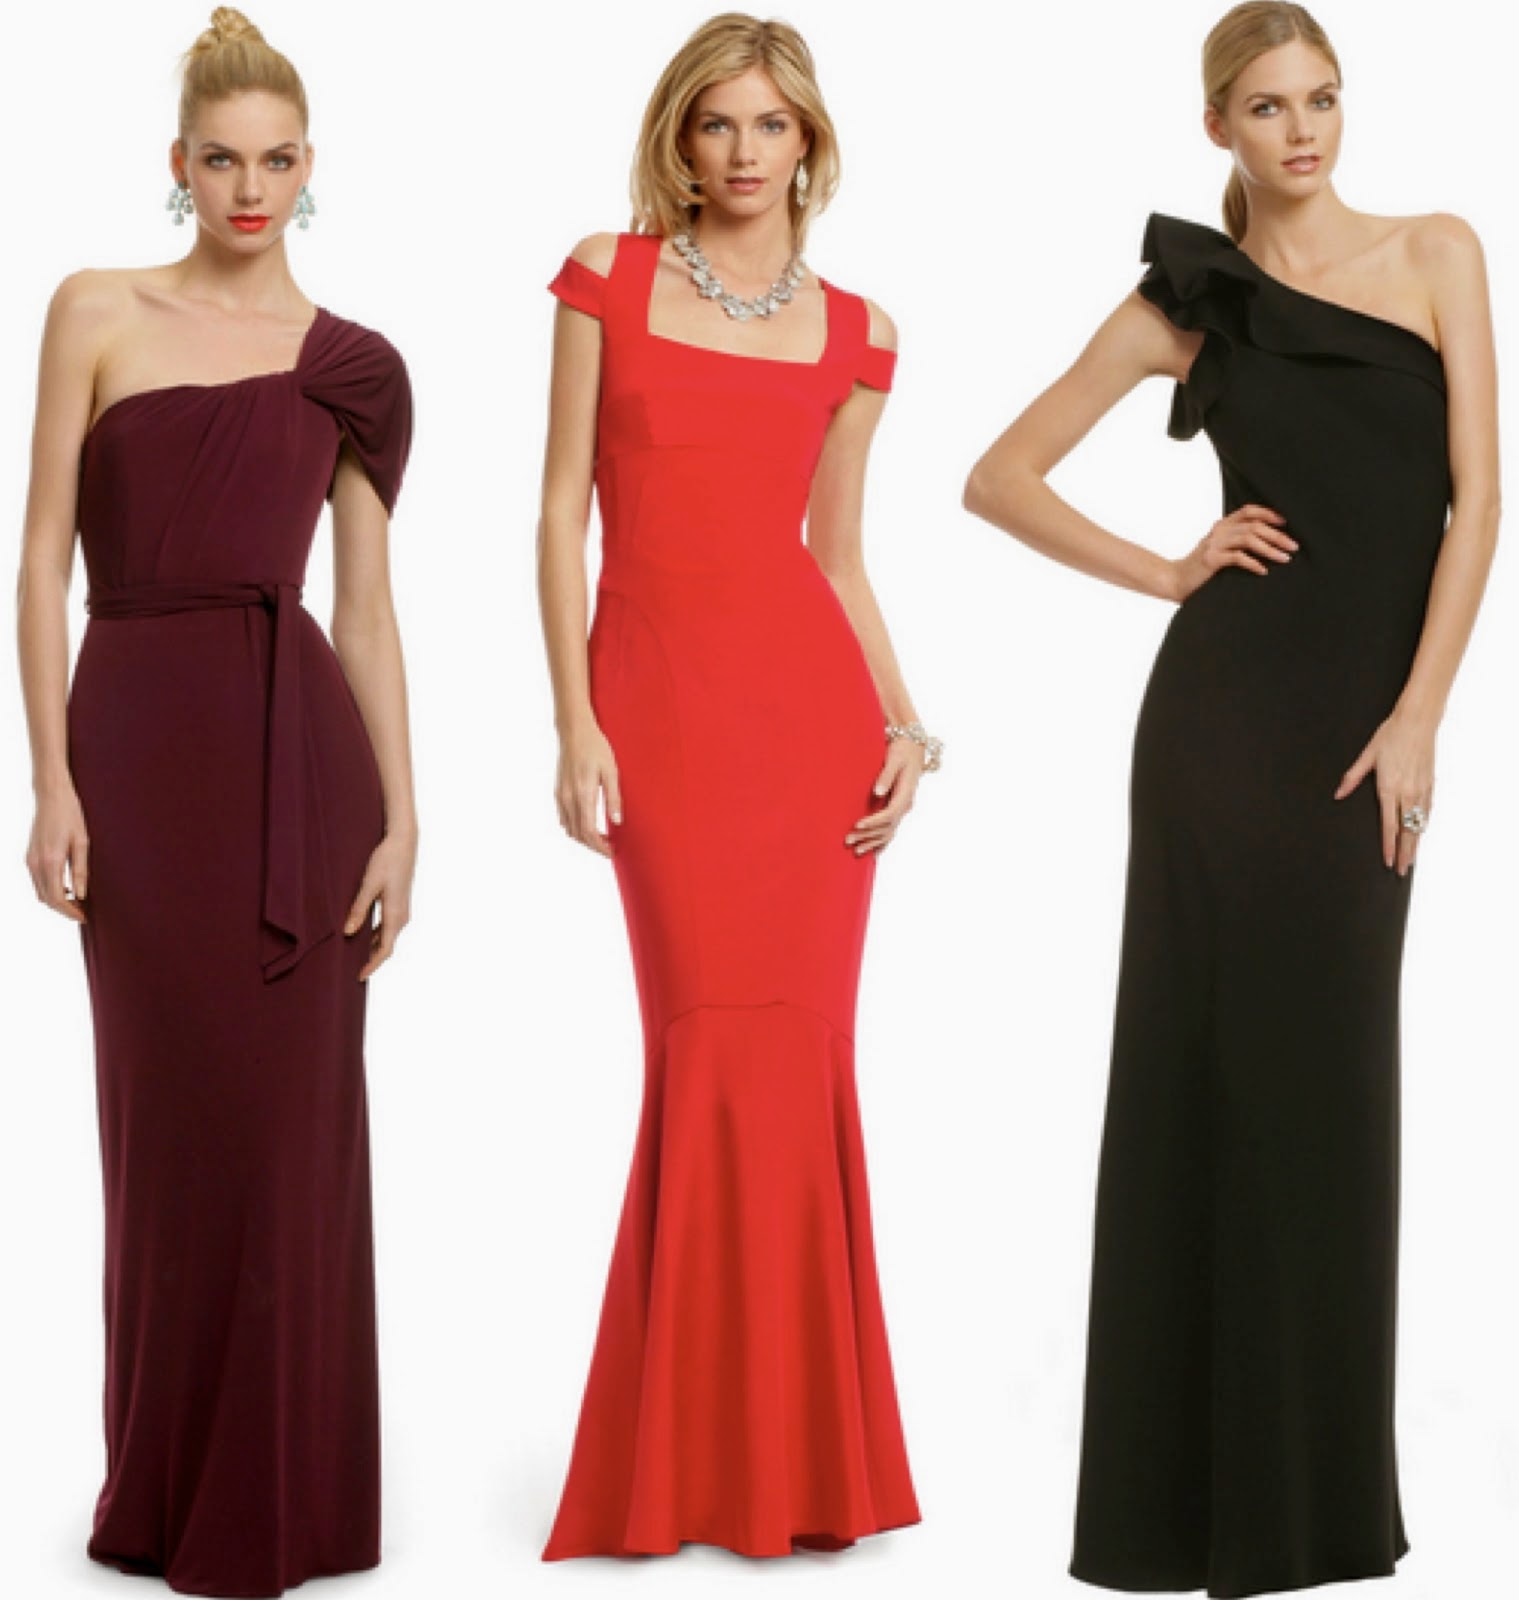 Black Tie Dress Code For Women  Cocktail Dresses 2016